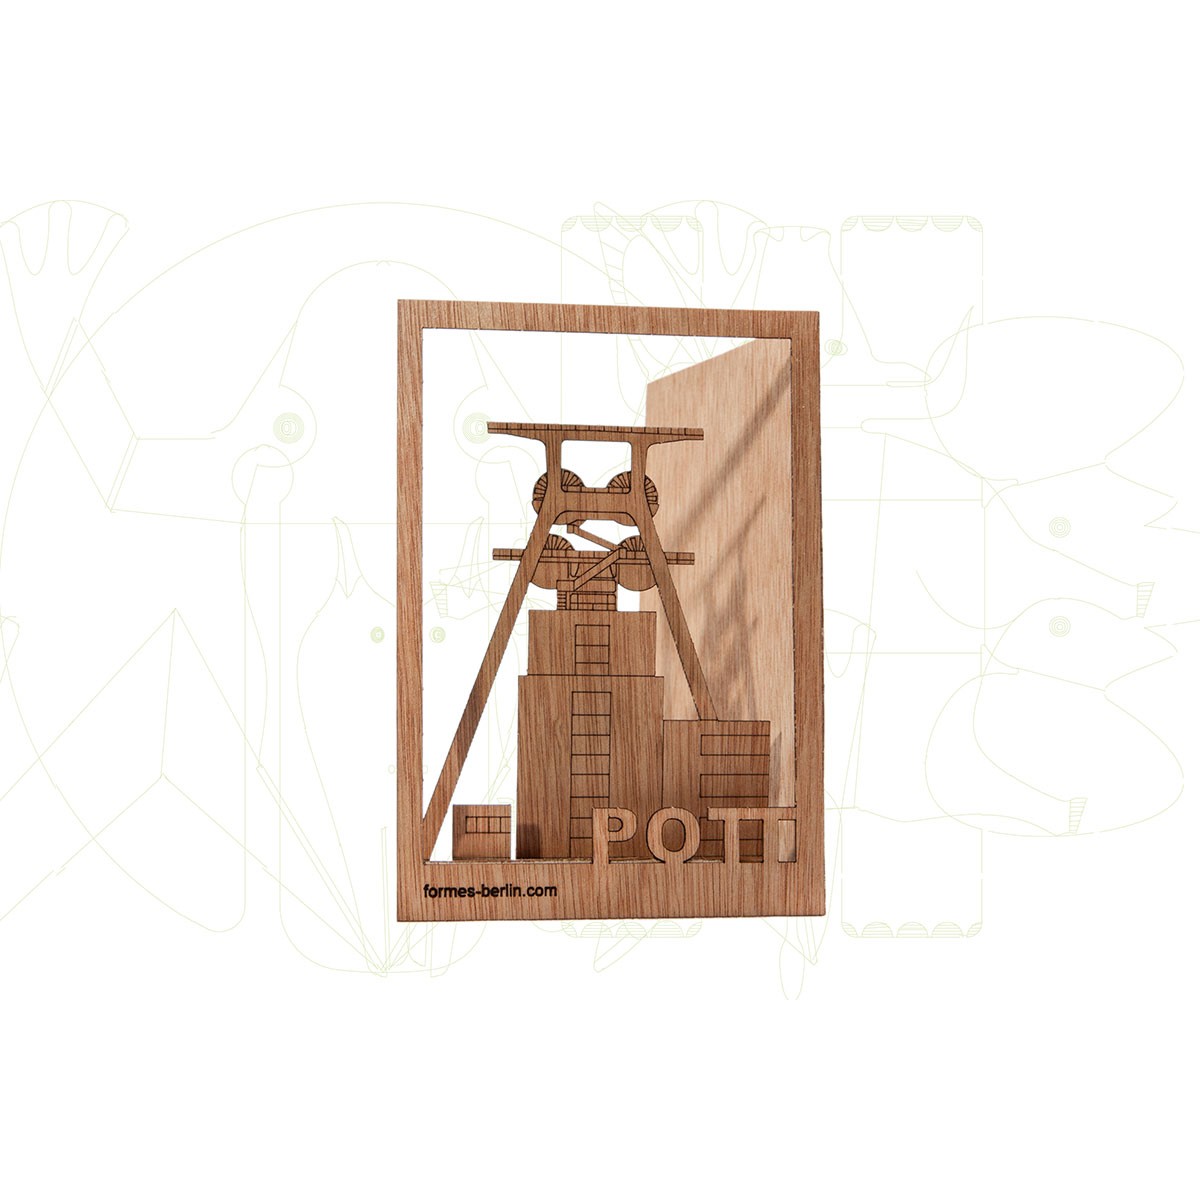 formes Berlin Pott-Karte - 6 Postkarten aus Holz